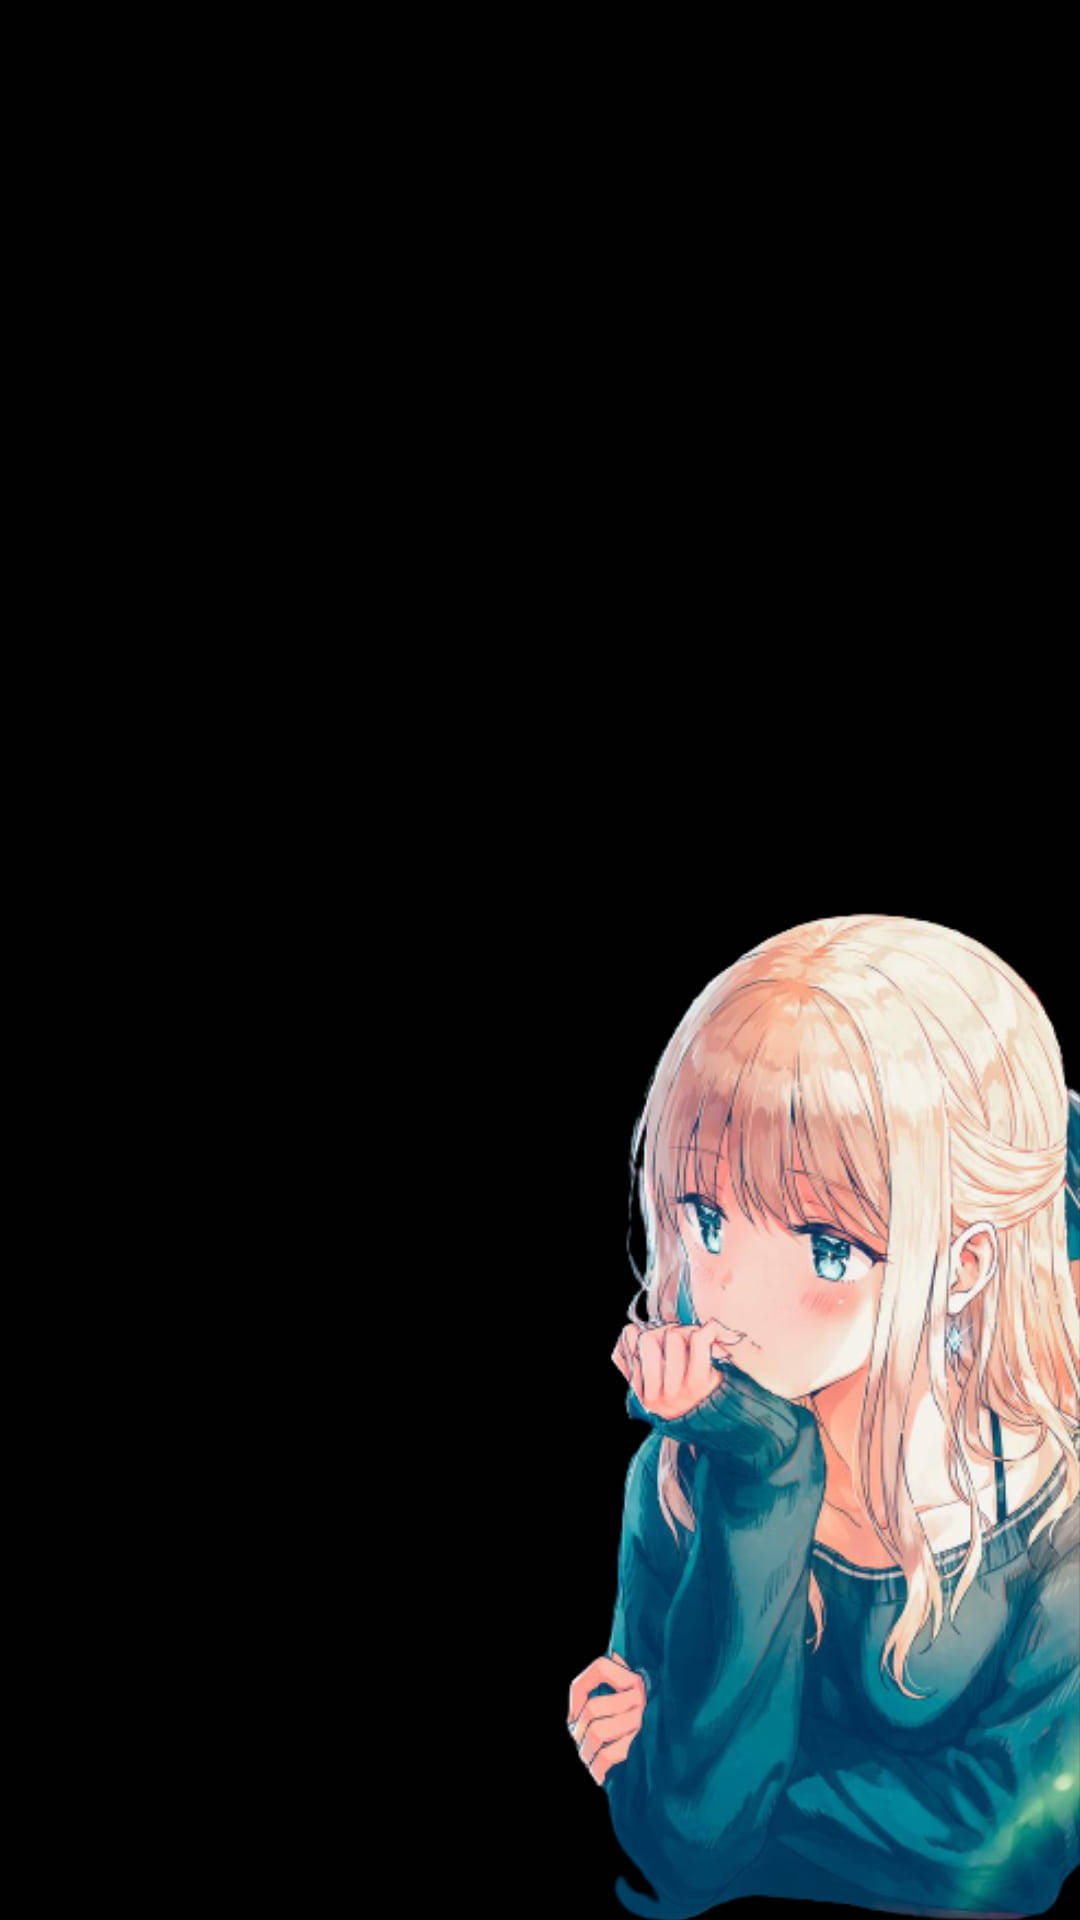 Aesthetic Sad Anime Girl Black Background